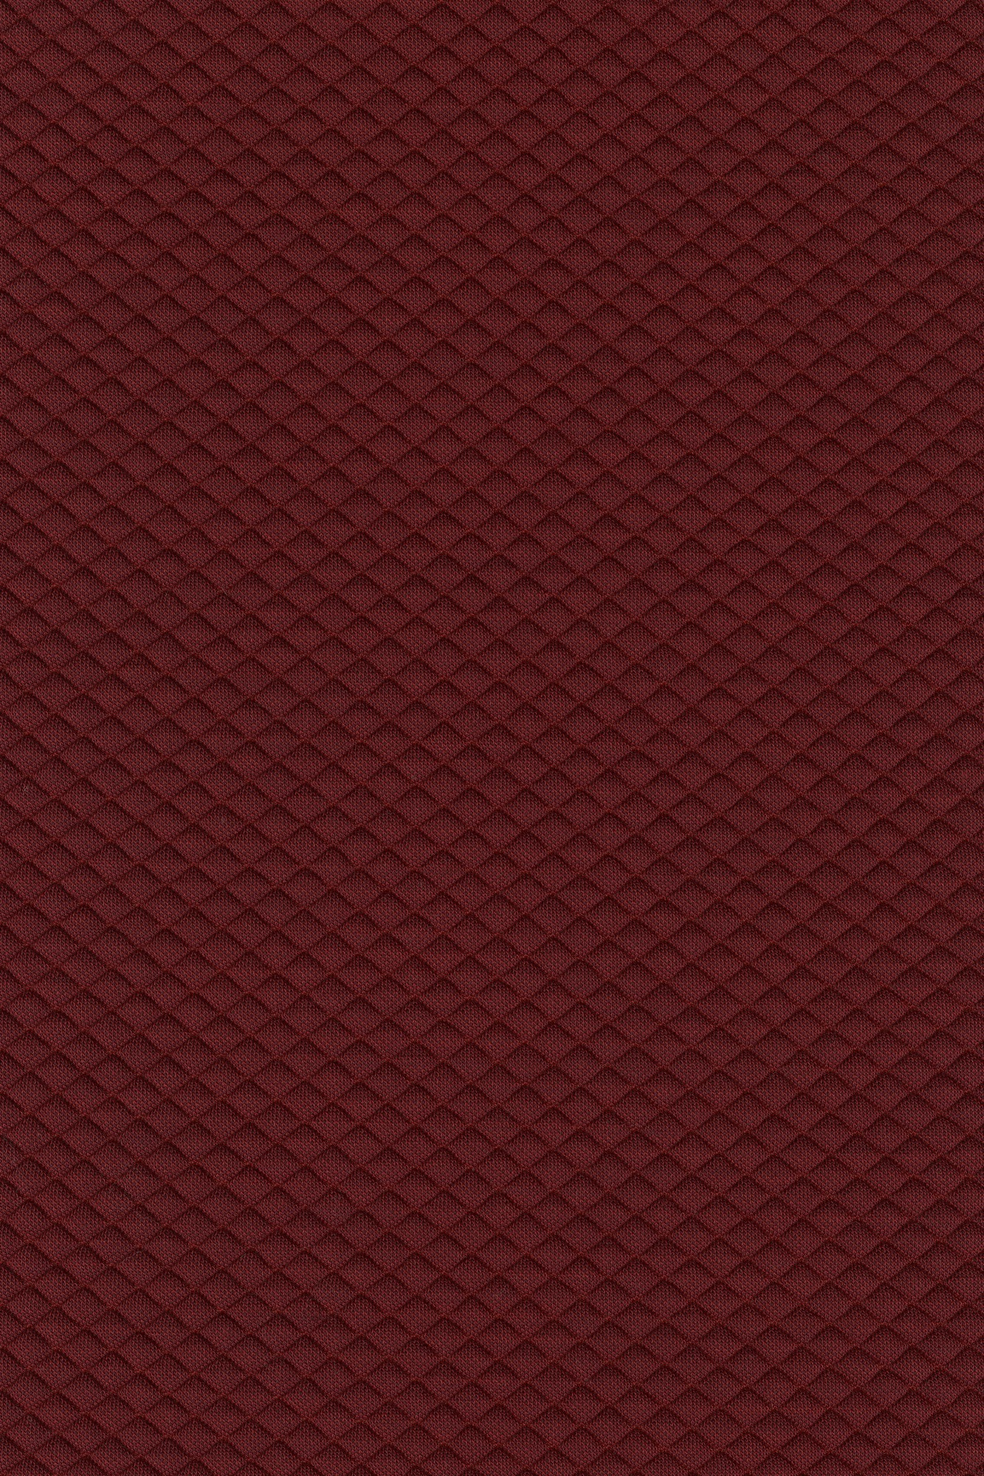 Fabric sample Mosaic 2 0662 red